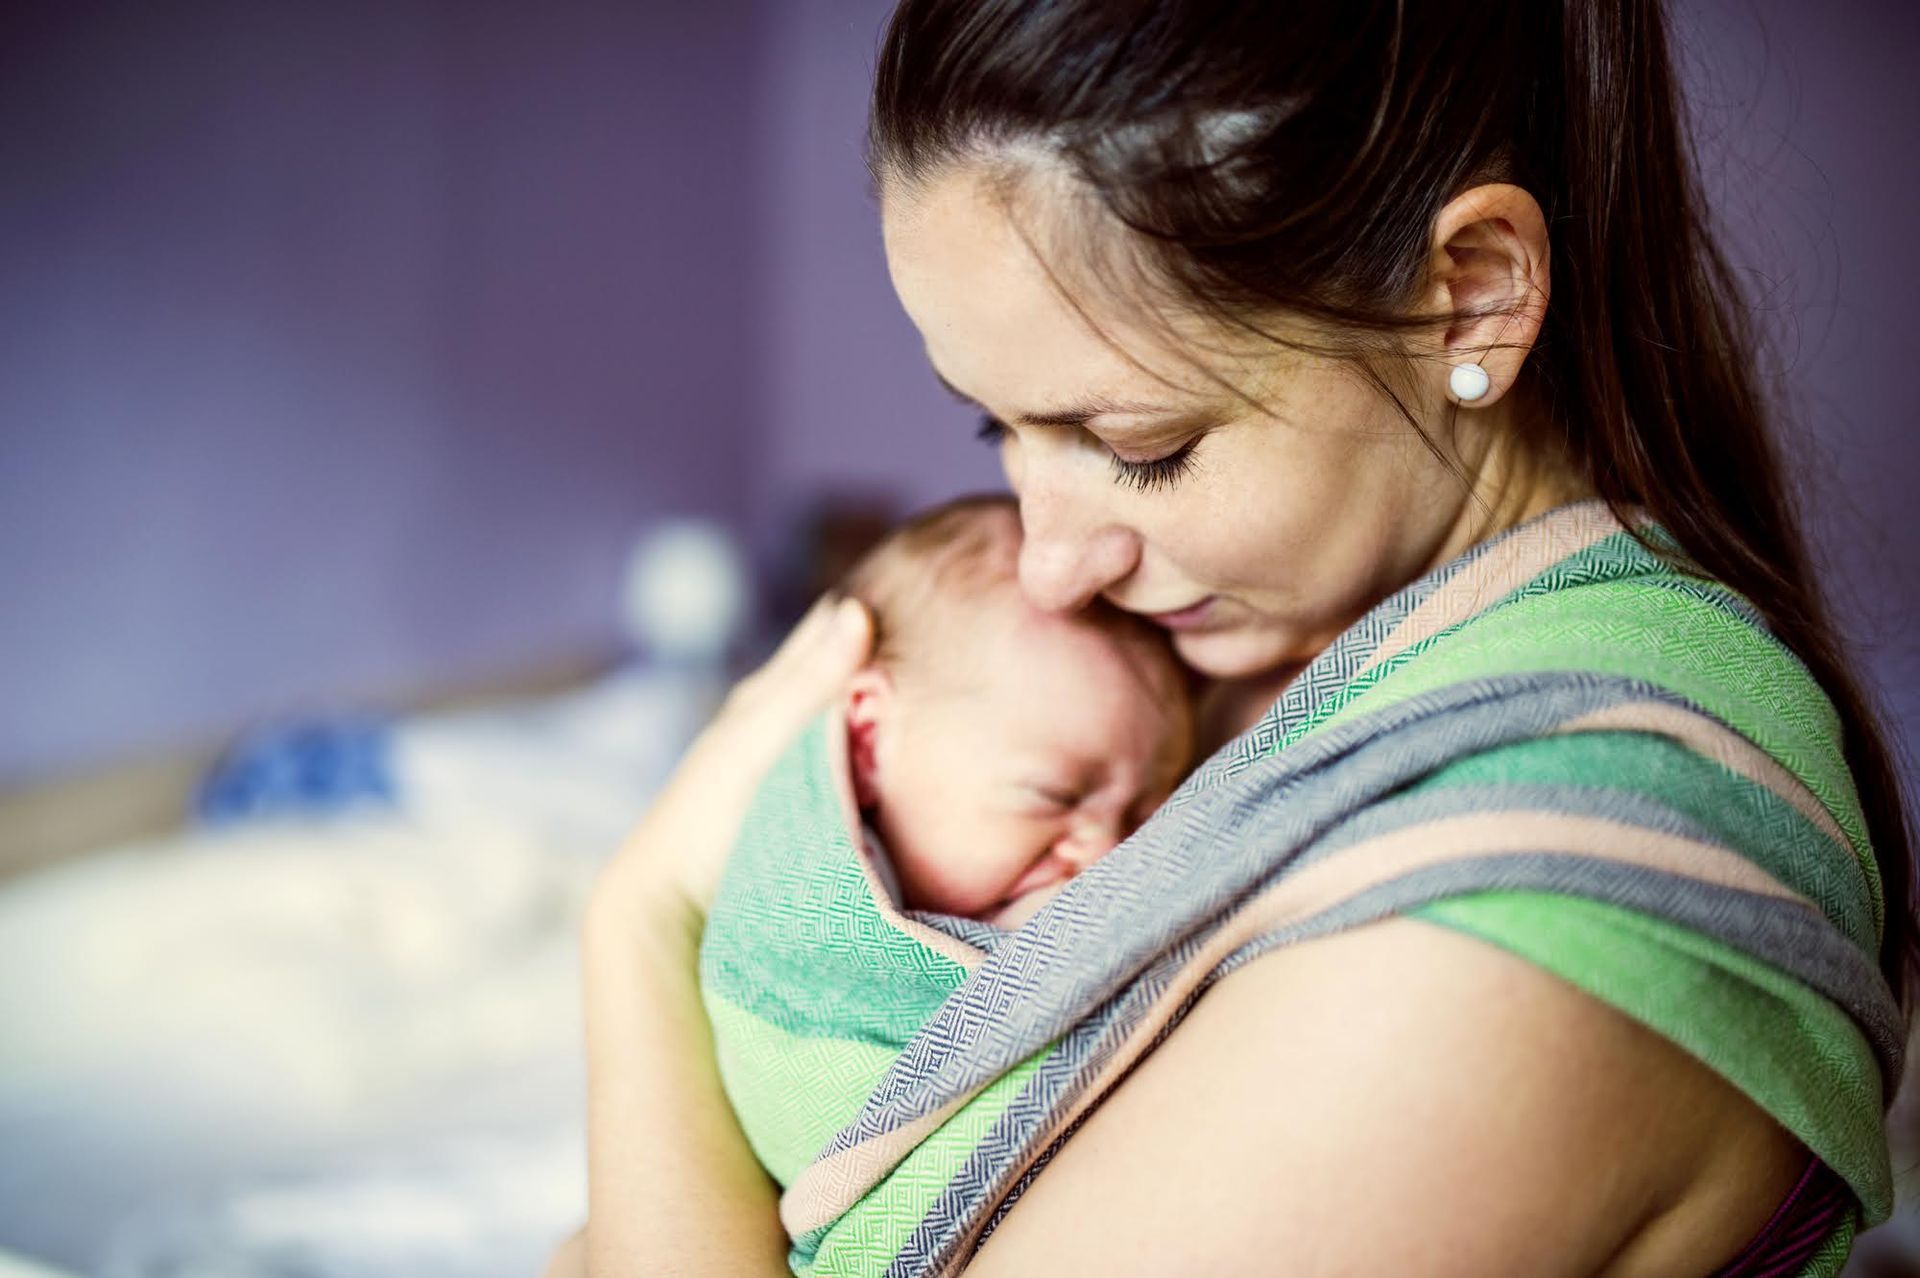 A Woman Is Holding A Baby - Stuart, FL - Karen Johnson Law